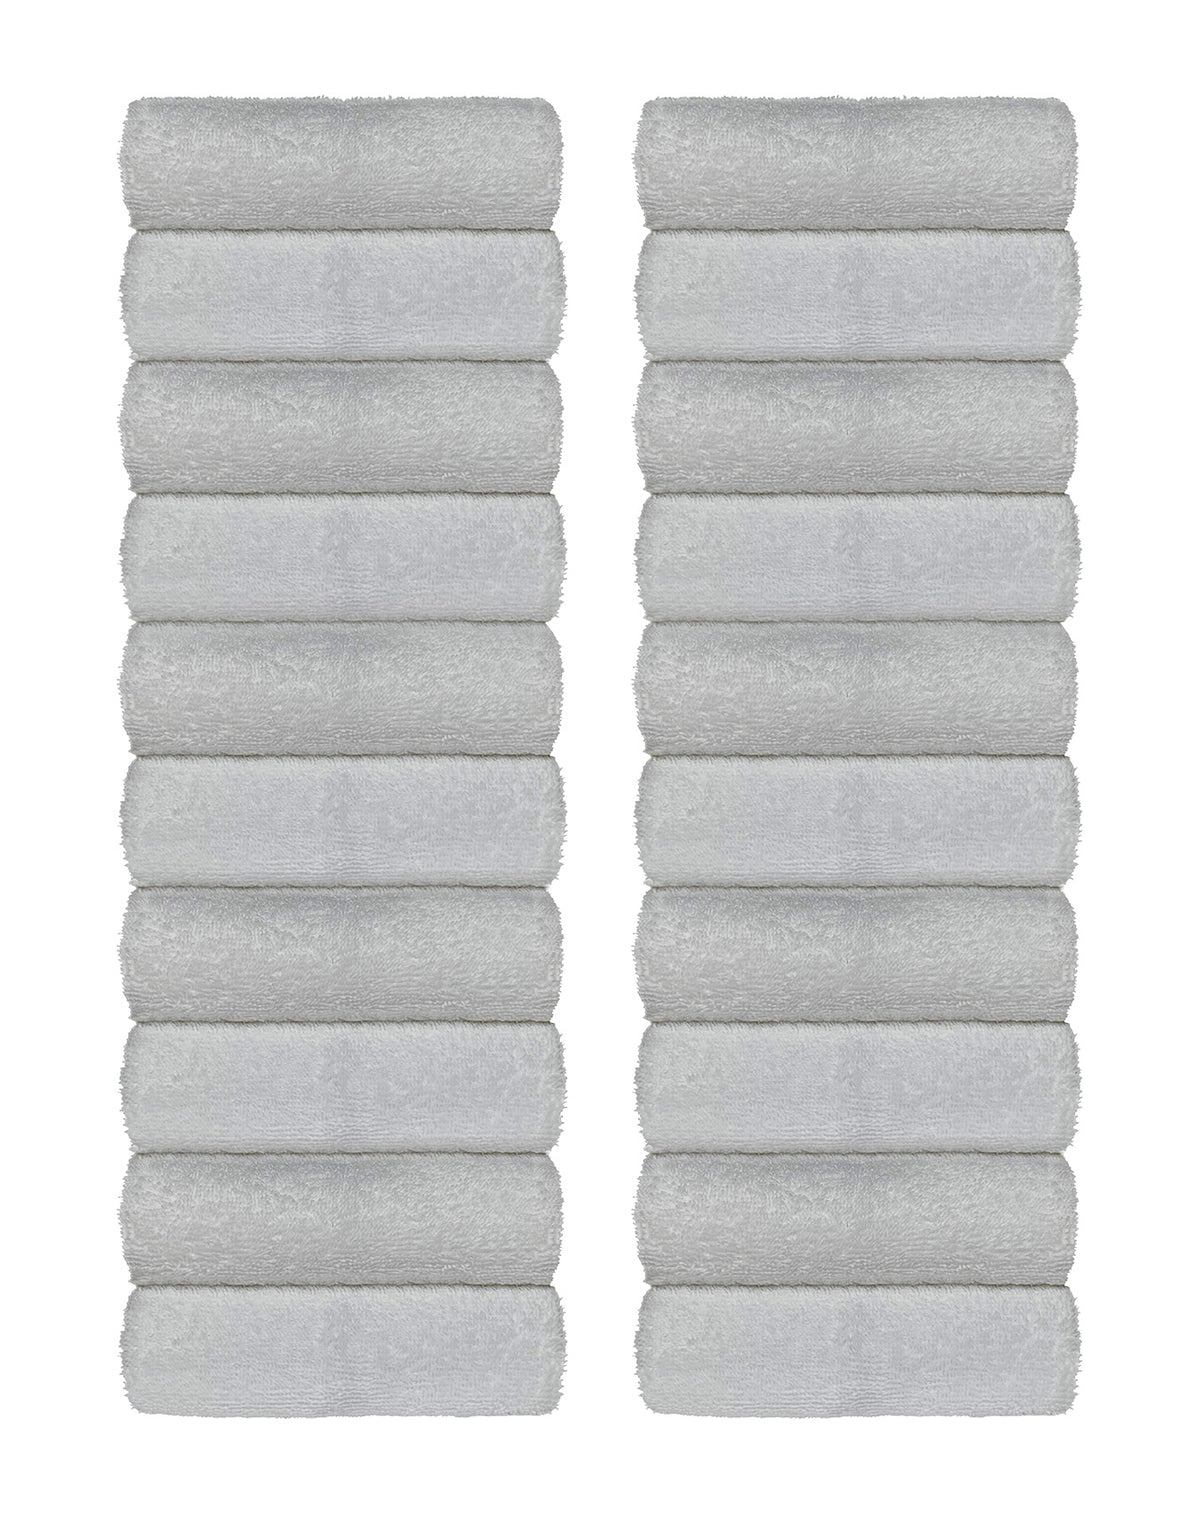 Set Asciugamani Bagno 100% Cotone Super Assorbenti Telo Doccia Spugna Professionali Salvietta Lavetta Viso Asciugamano Teli Asciugamano -Grigio Chiaro